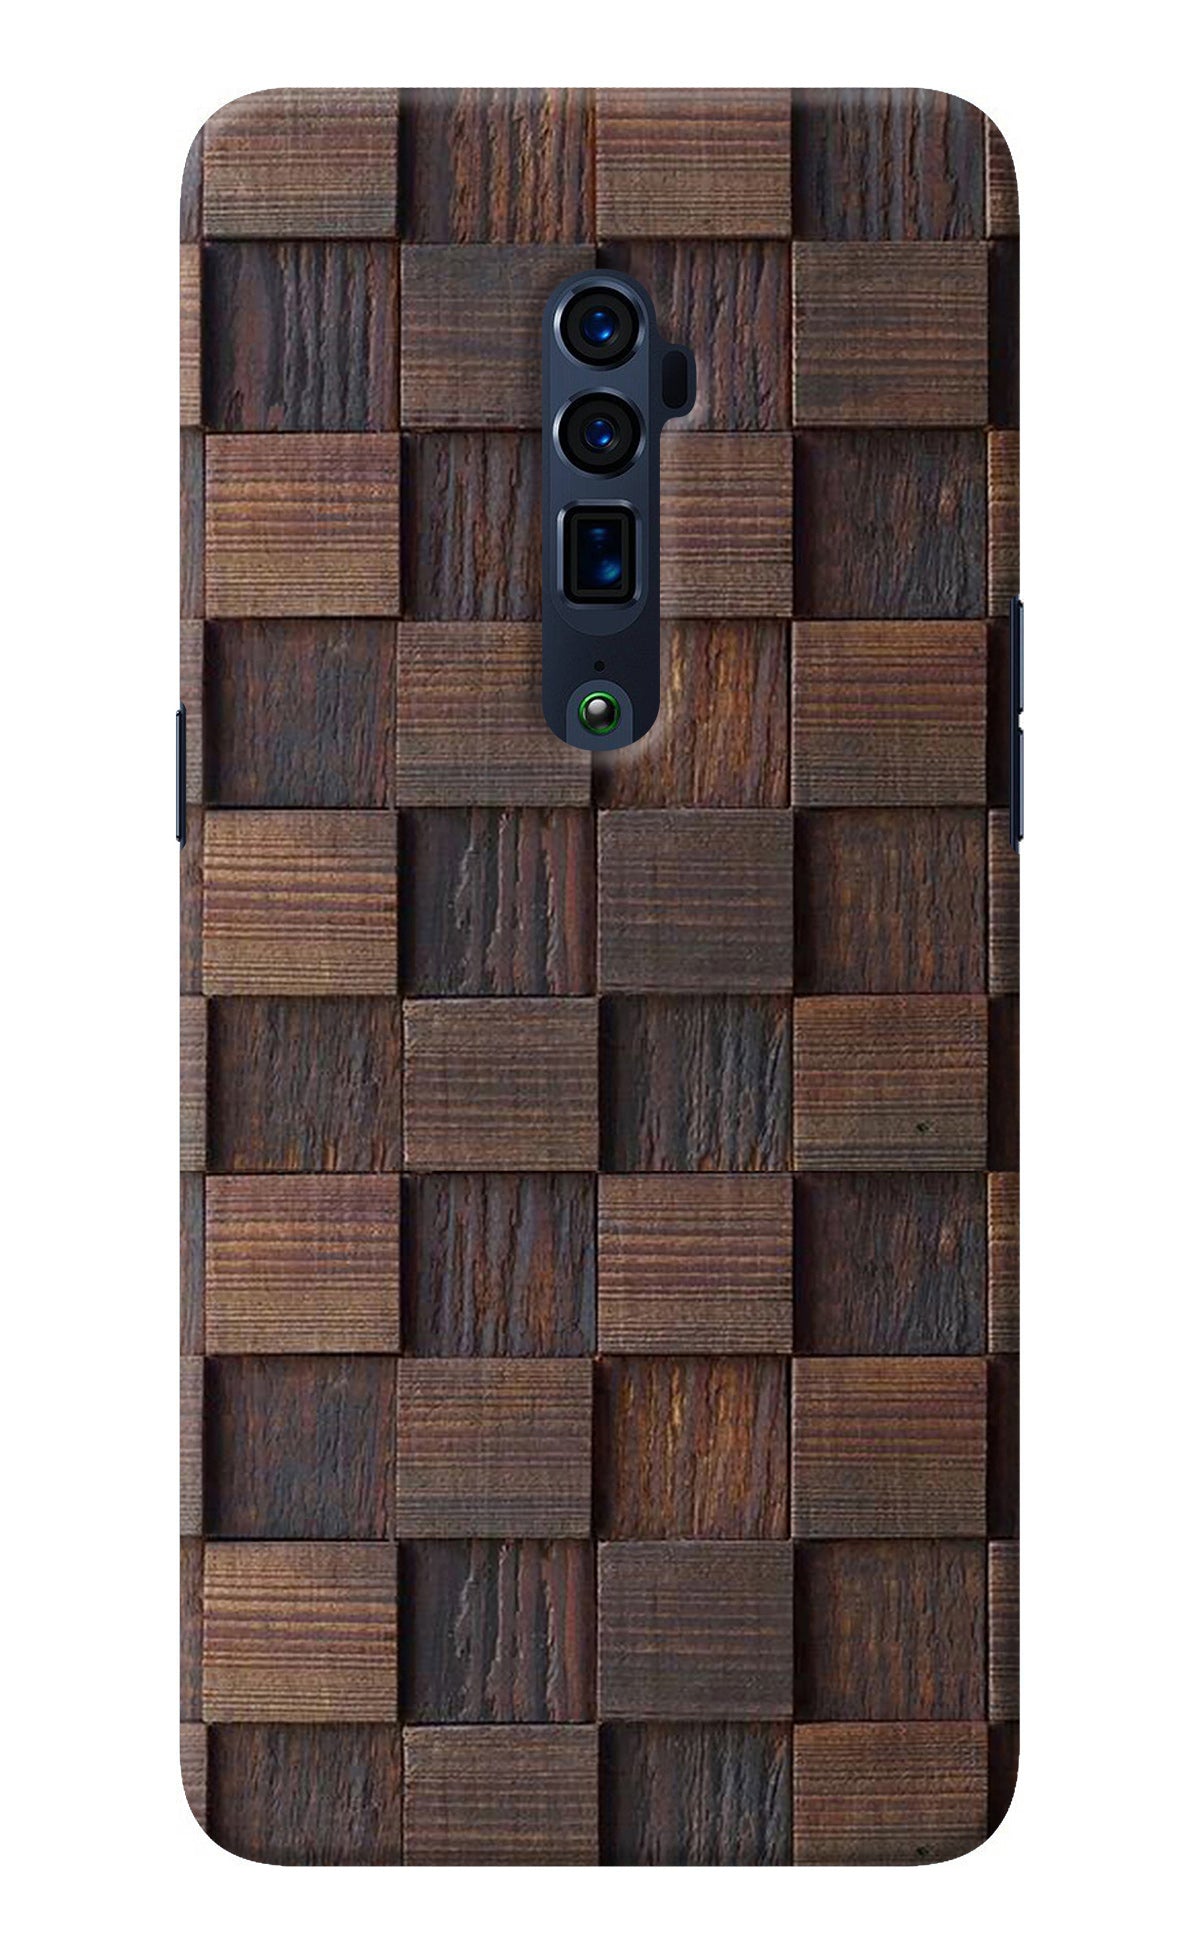 Wooden Cube Design Oppo Reno 10x Zoom Back Cover